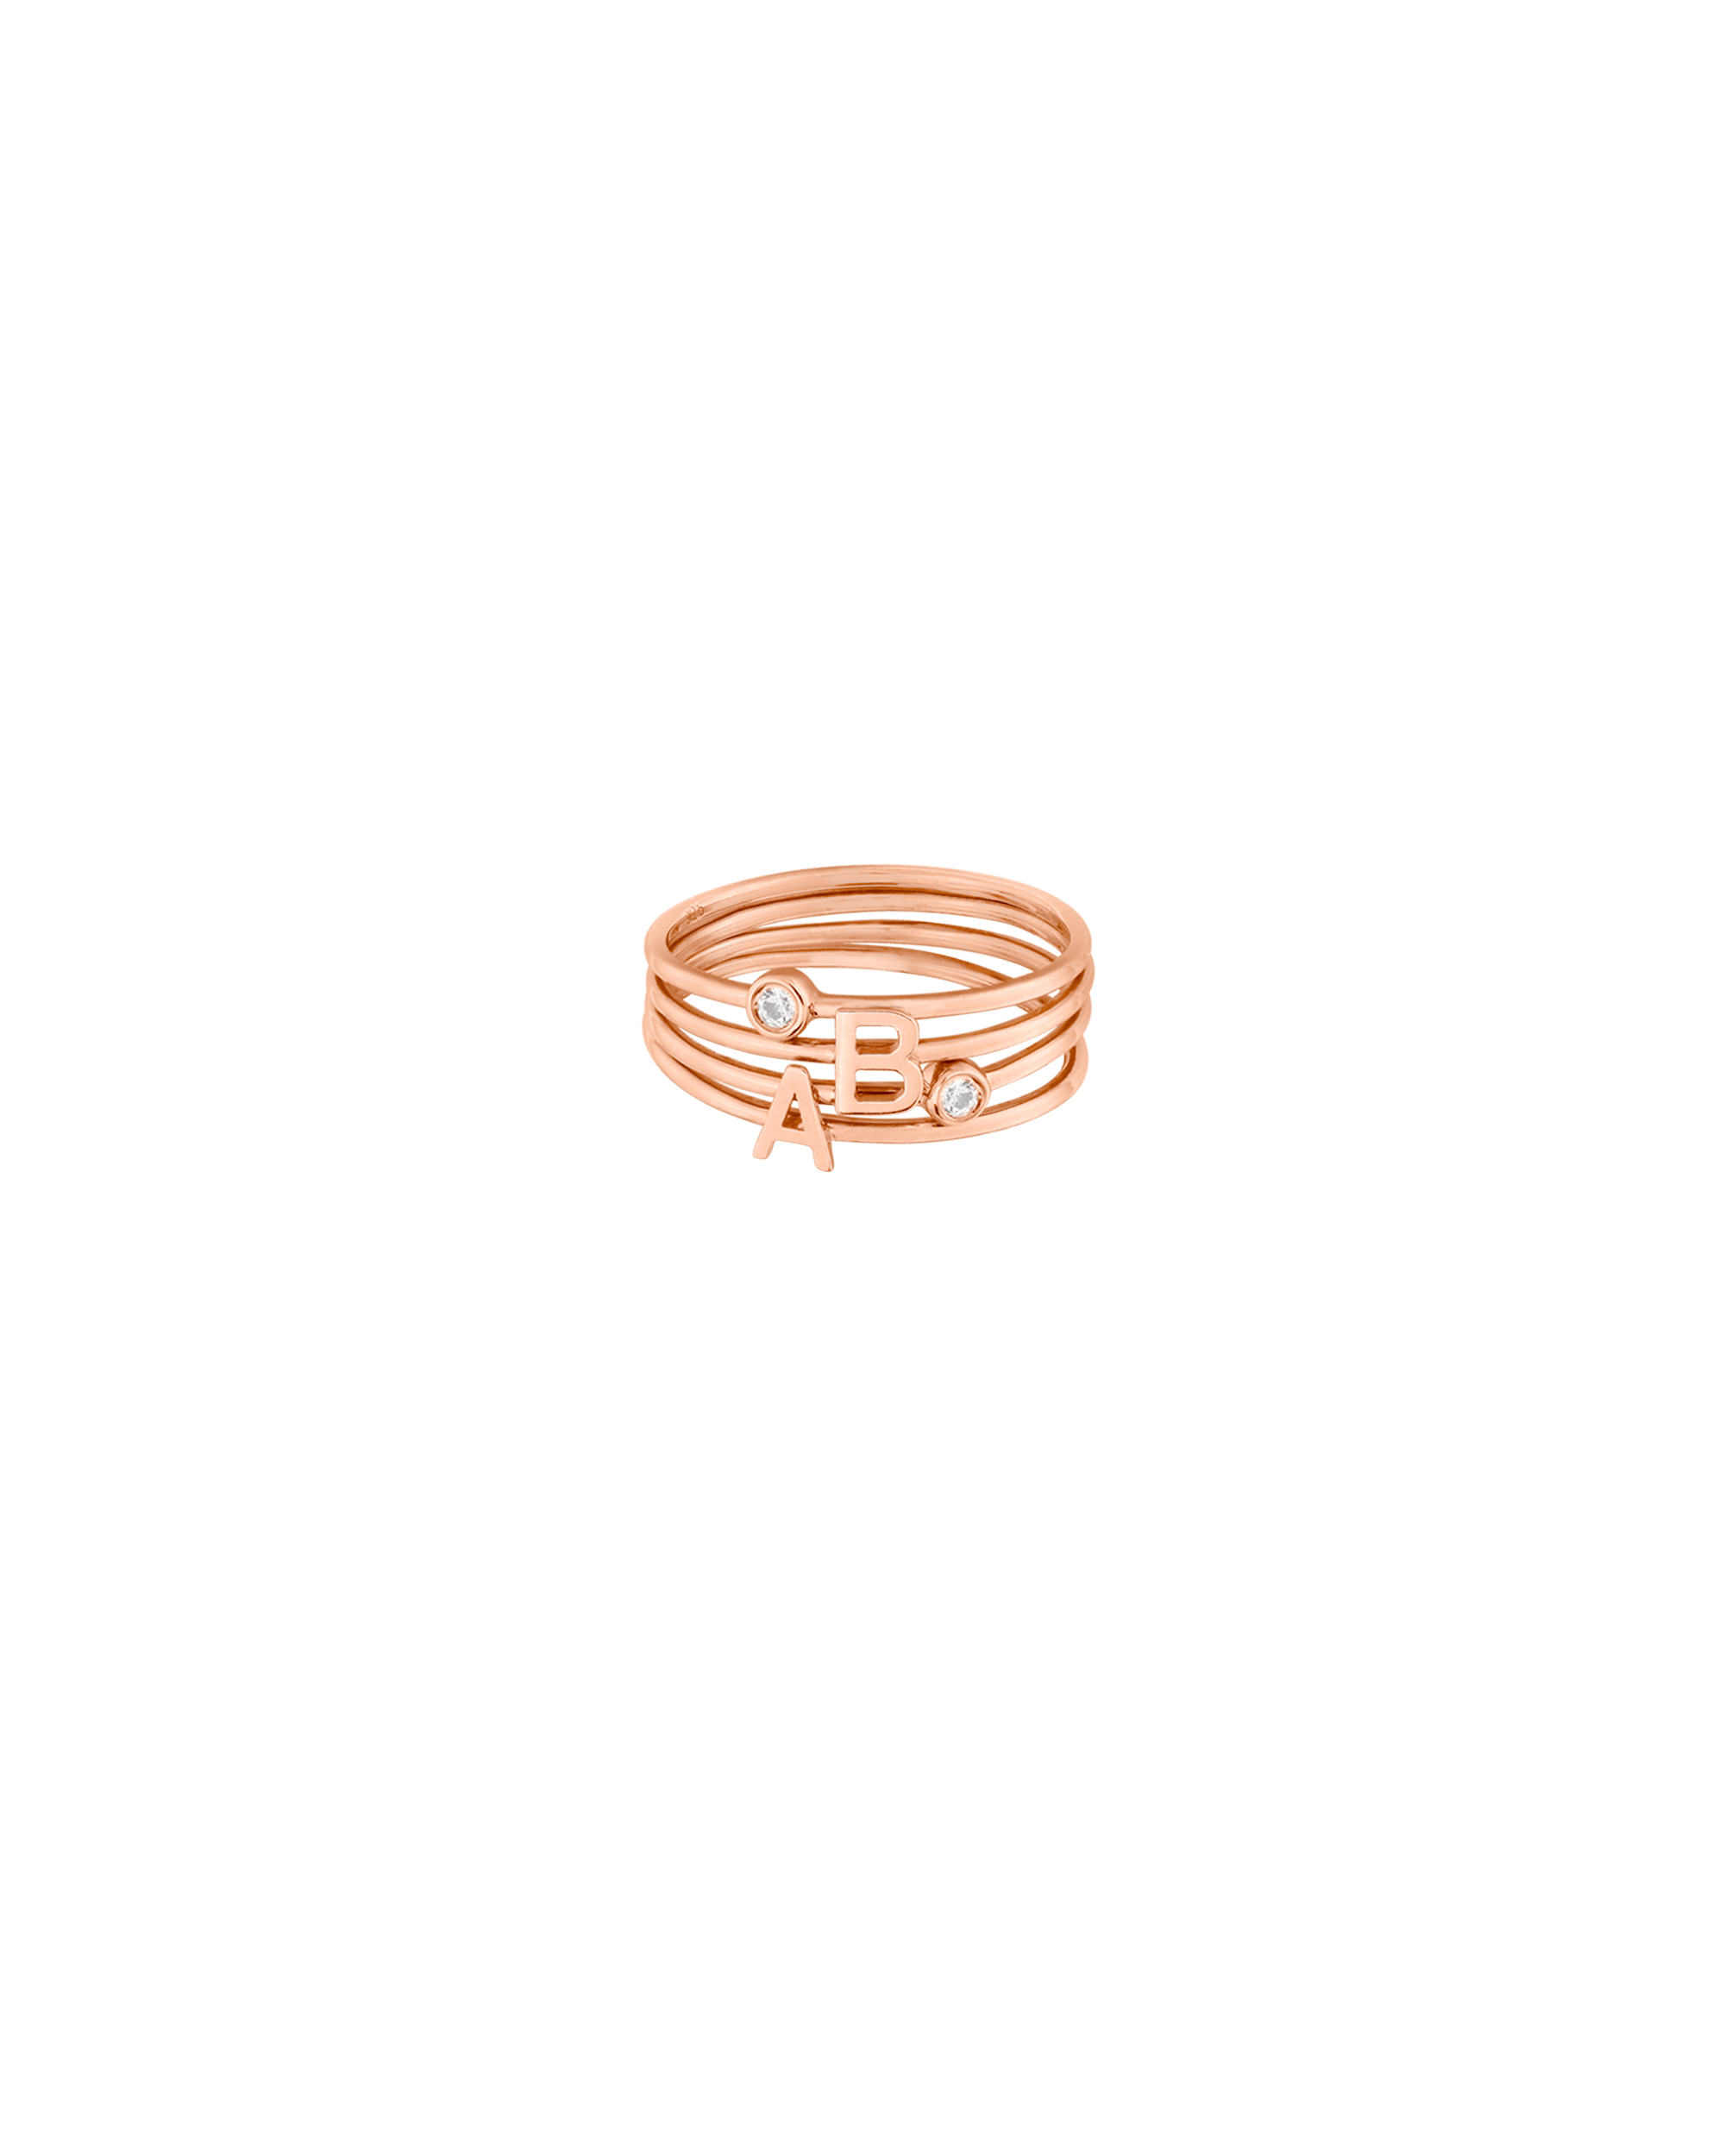 Stackable Initial Ring(s) - 18K Gold Vermeil Rings magal-dev 